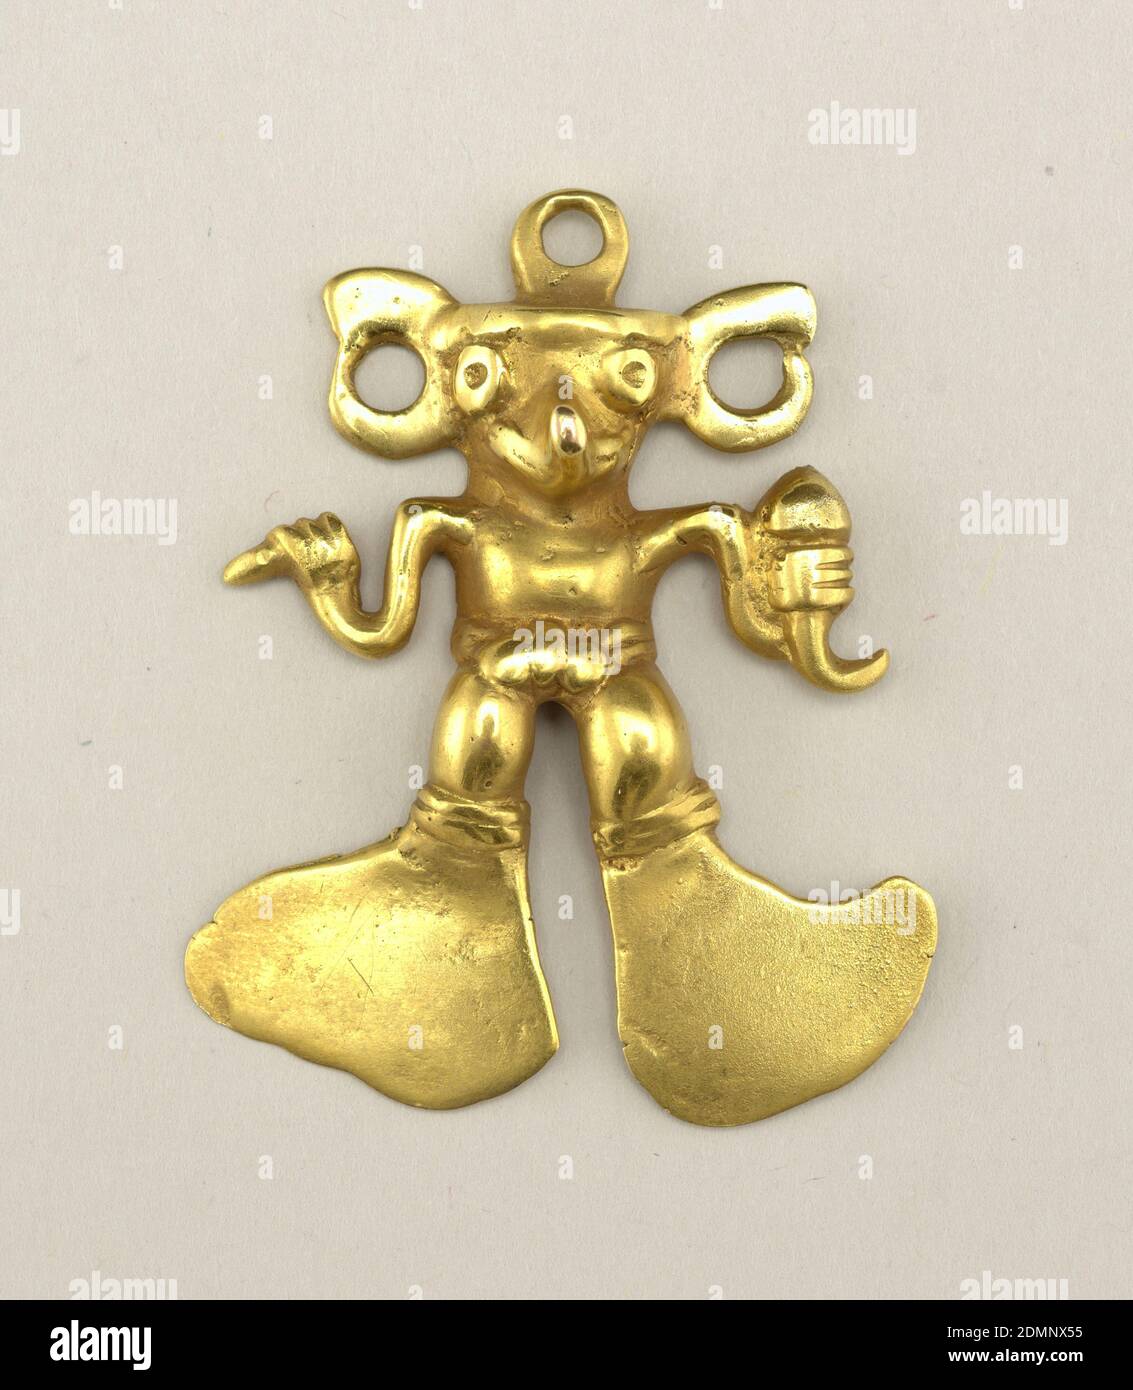 Ornament, Gold, Pre-Columbian pendant., Cocle, Panama, possibly 5th century, jewelry, Decorative Arts, Ornament Stock Photo